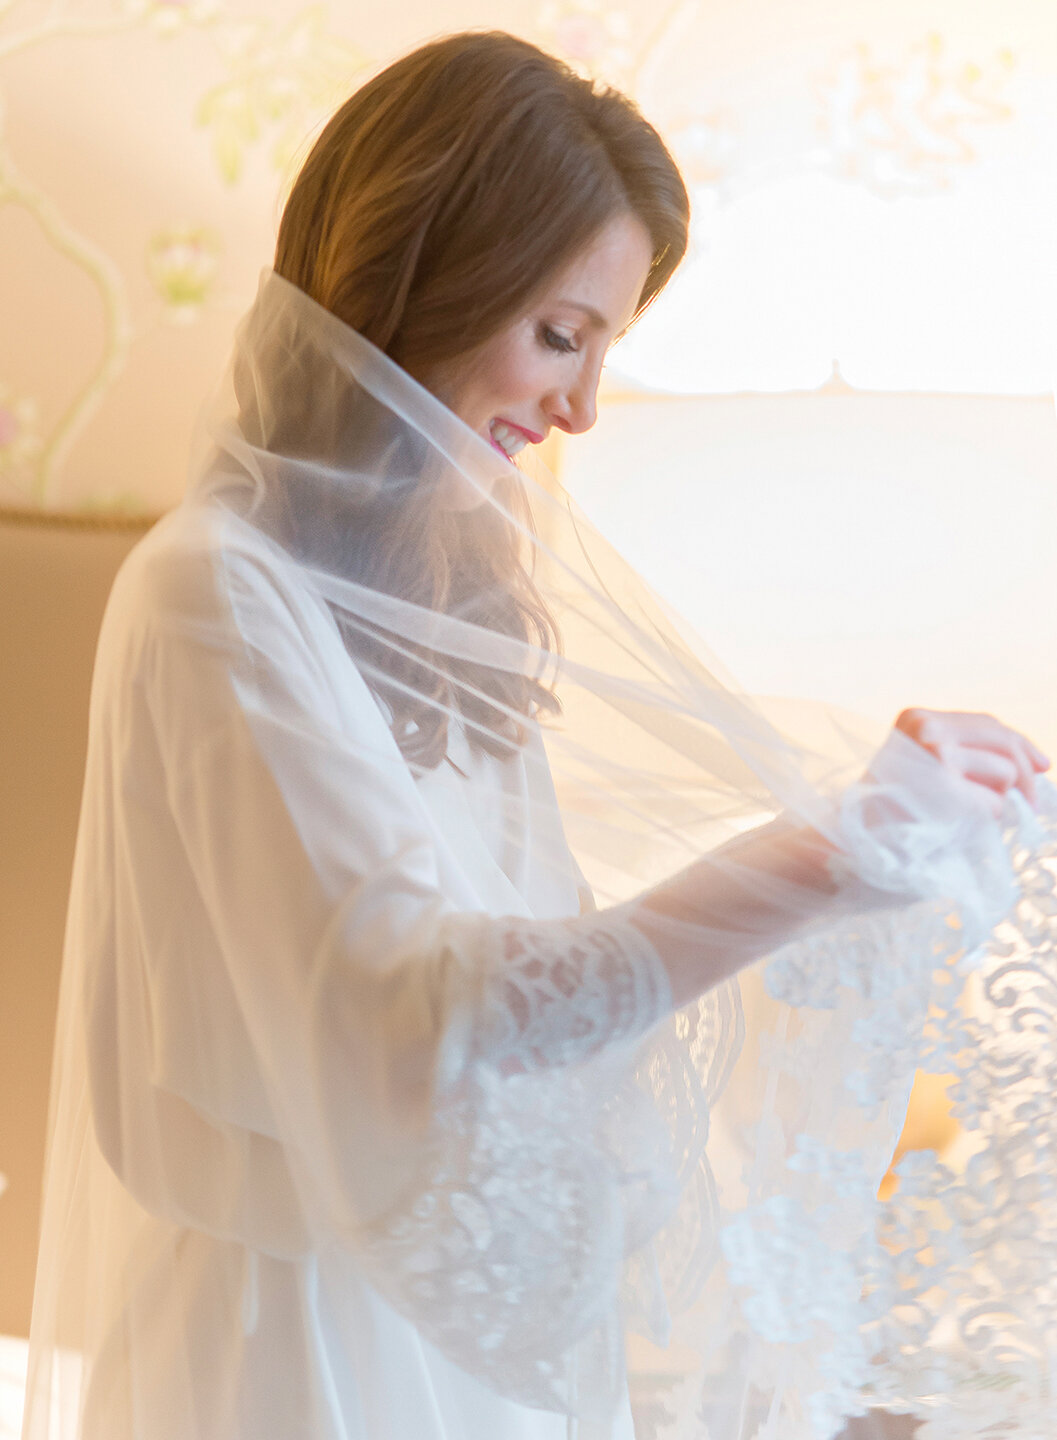 Kara's wedding preparations